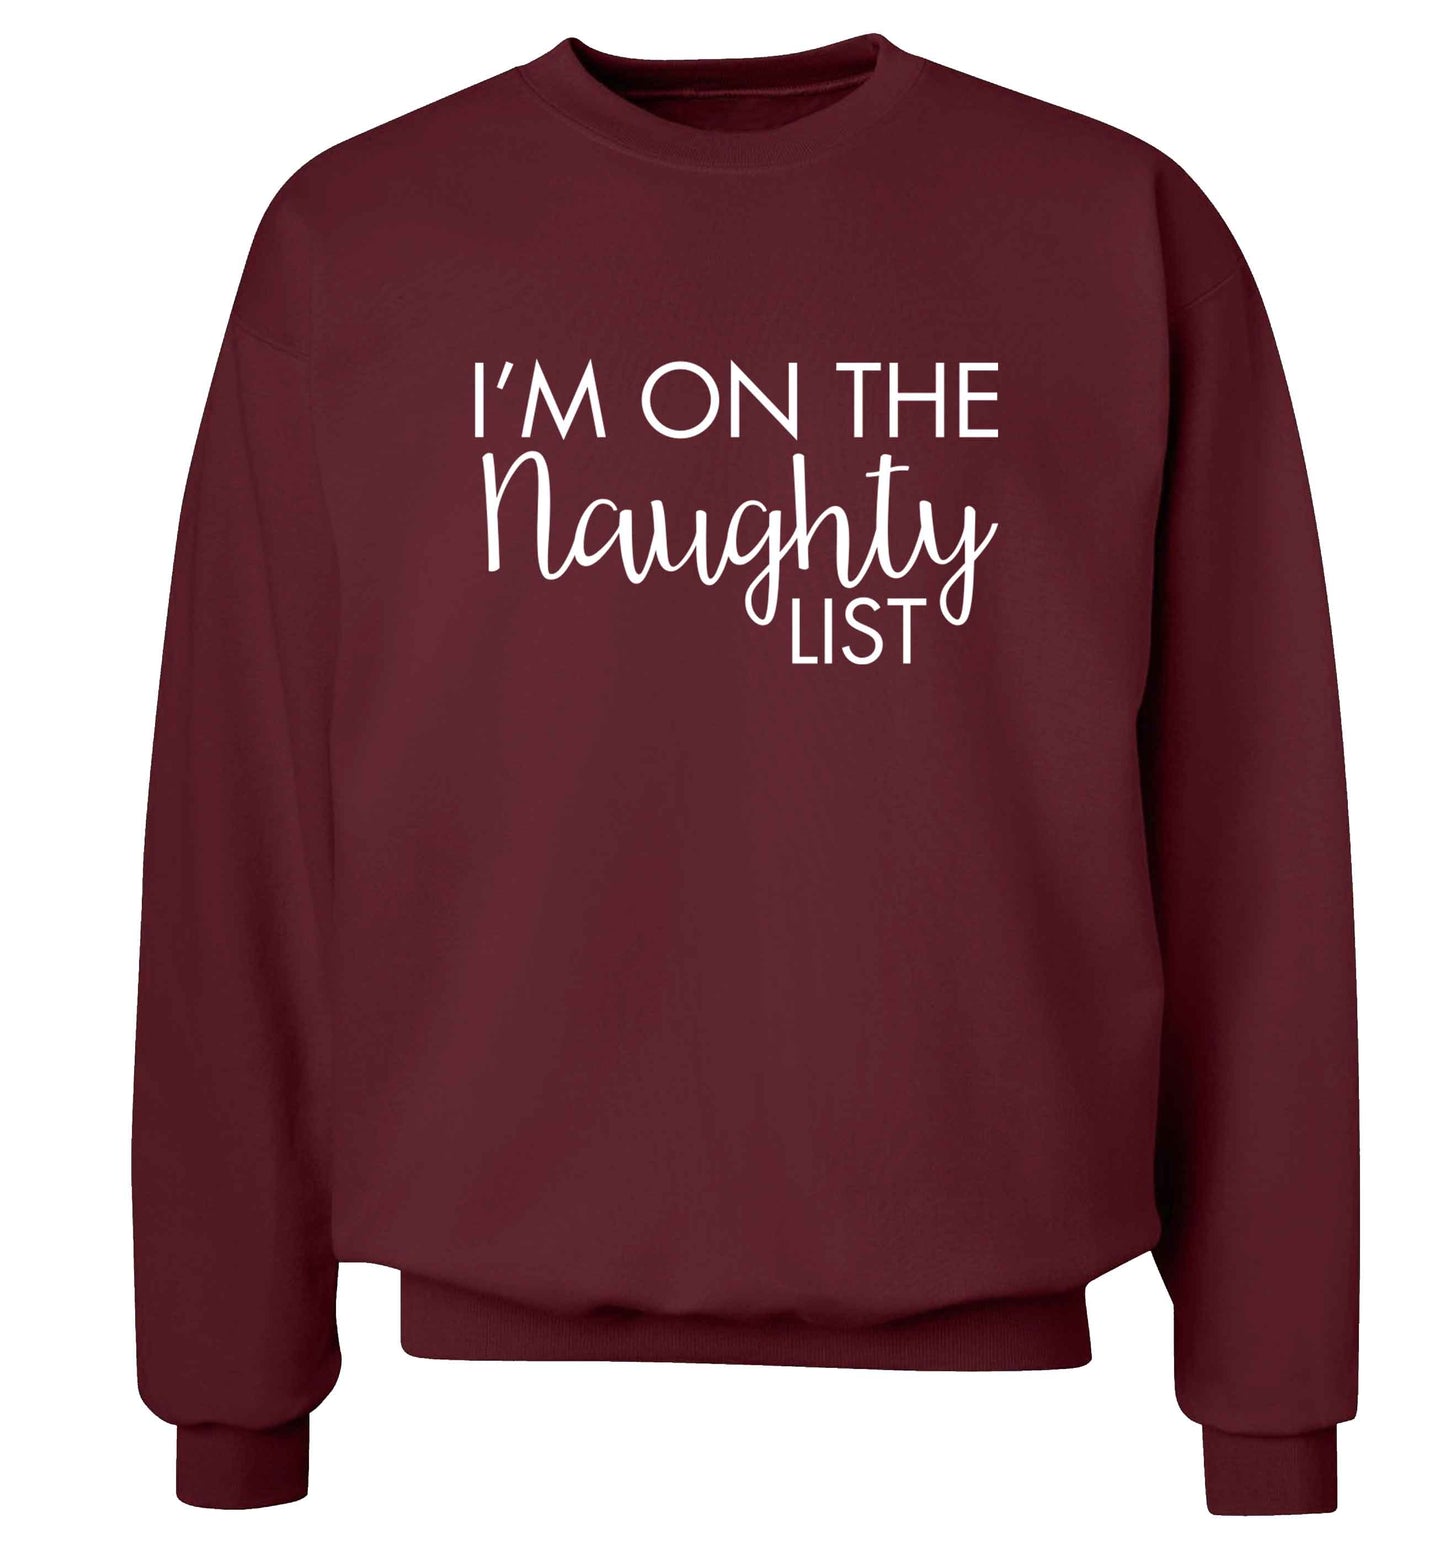 I'm on the naughty list adult's unisex maroon sweater 2XL